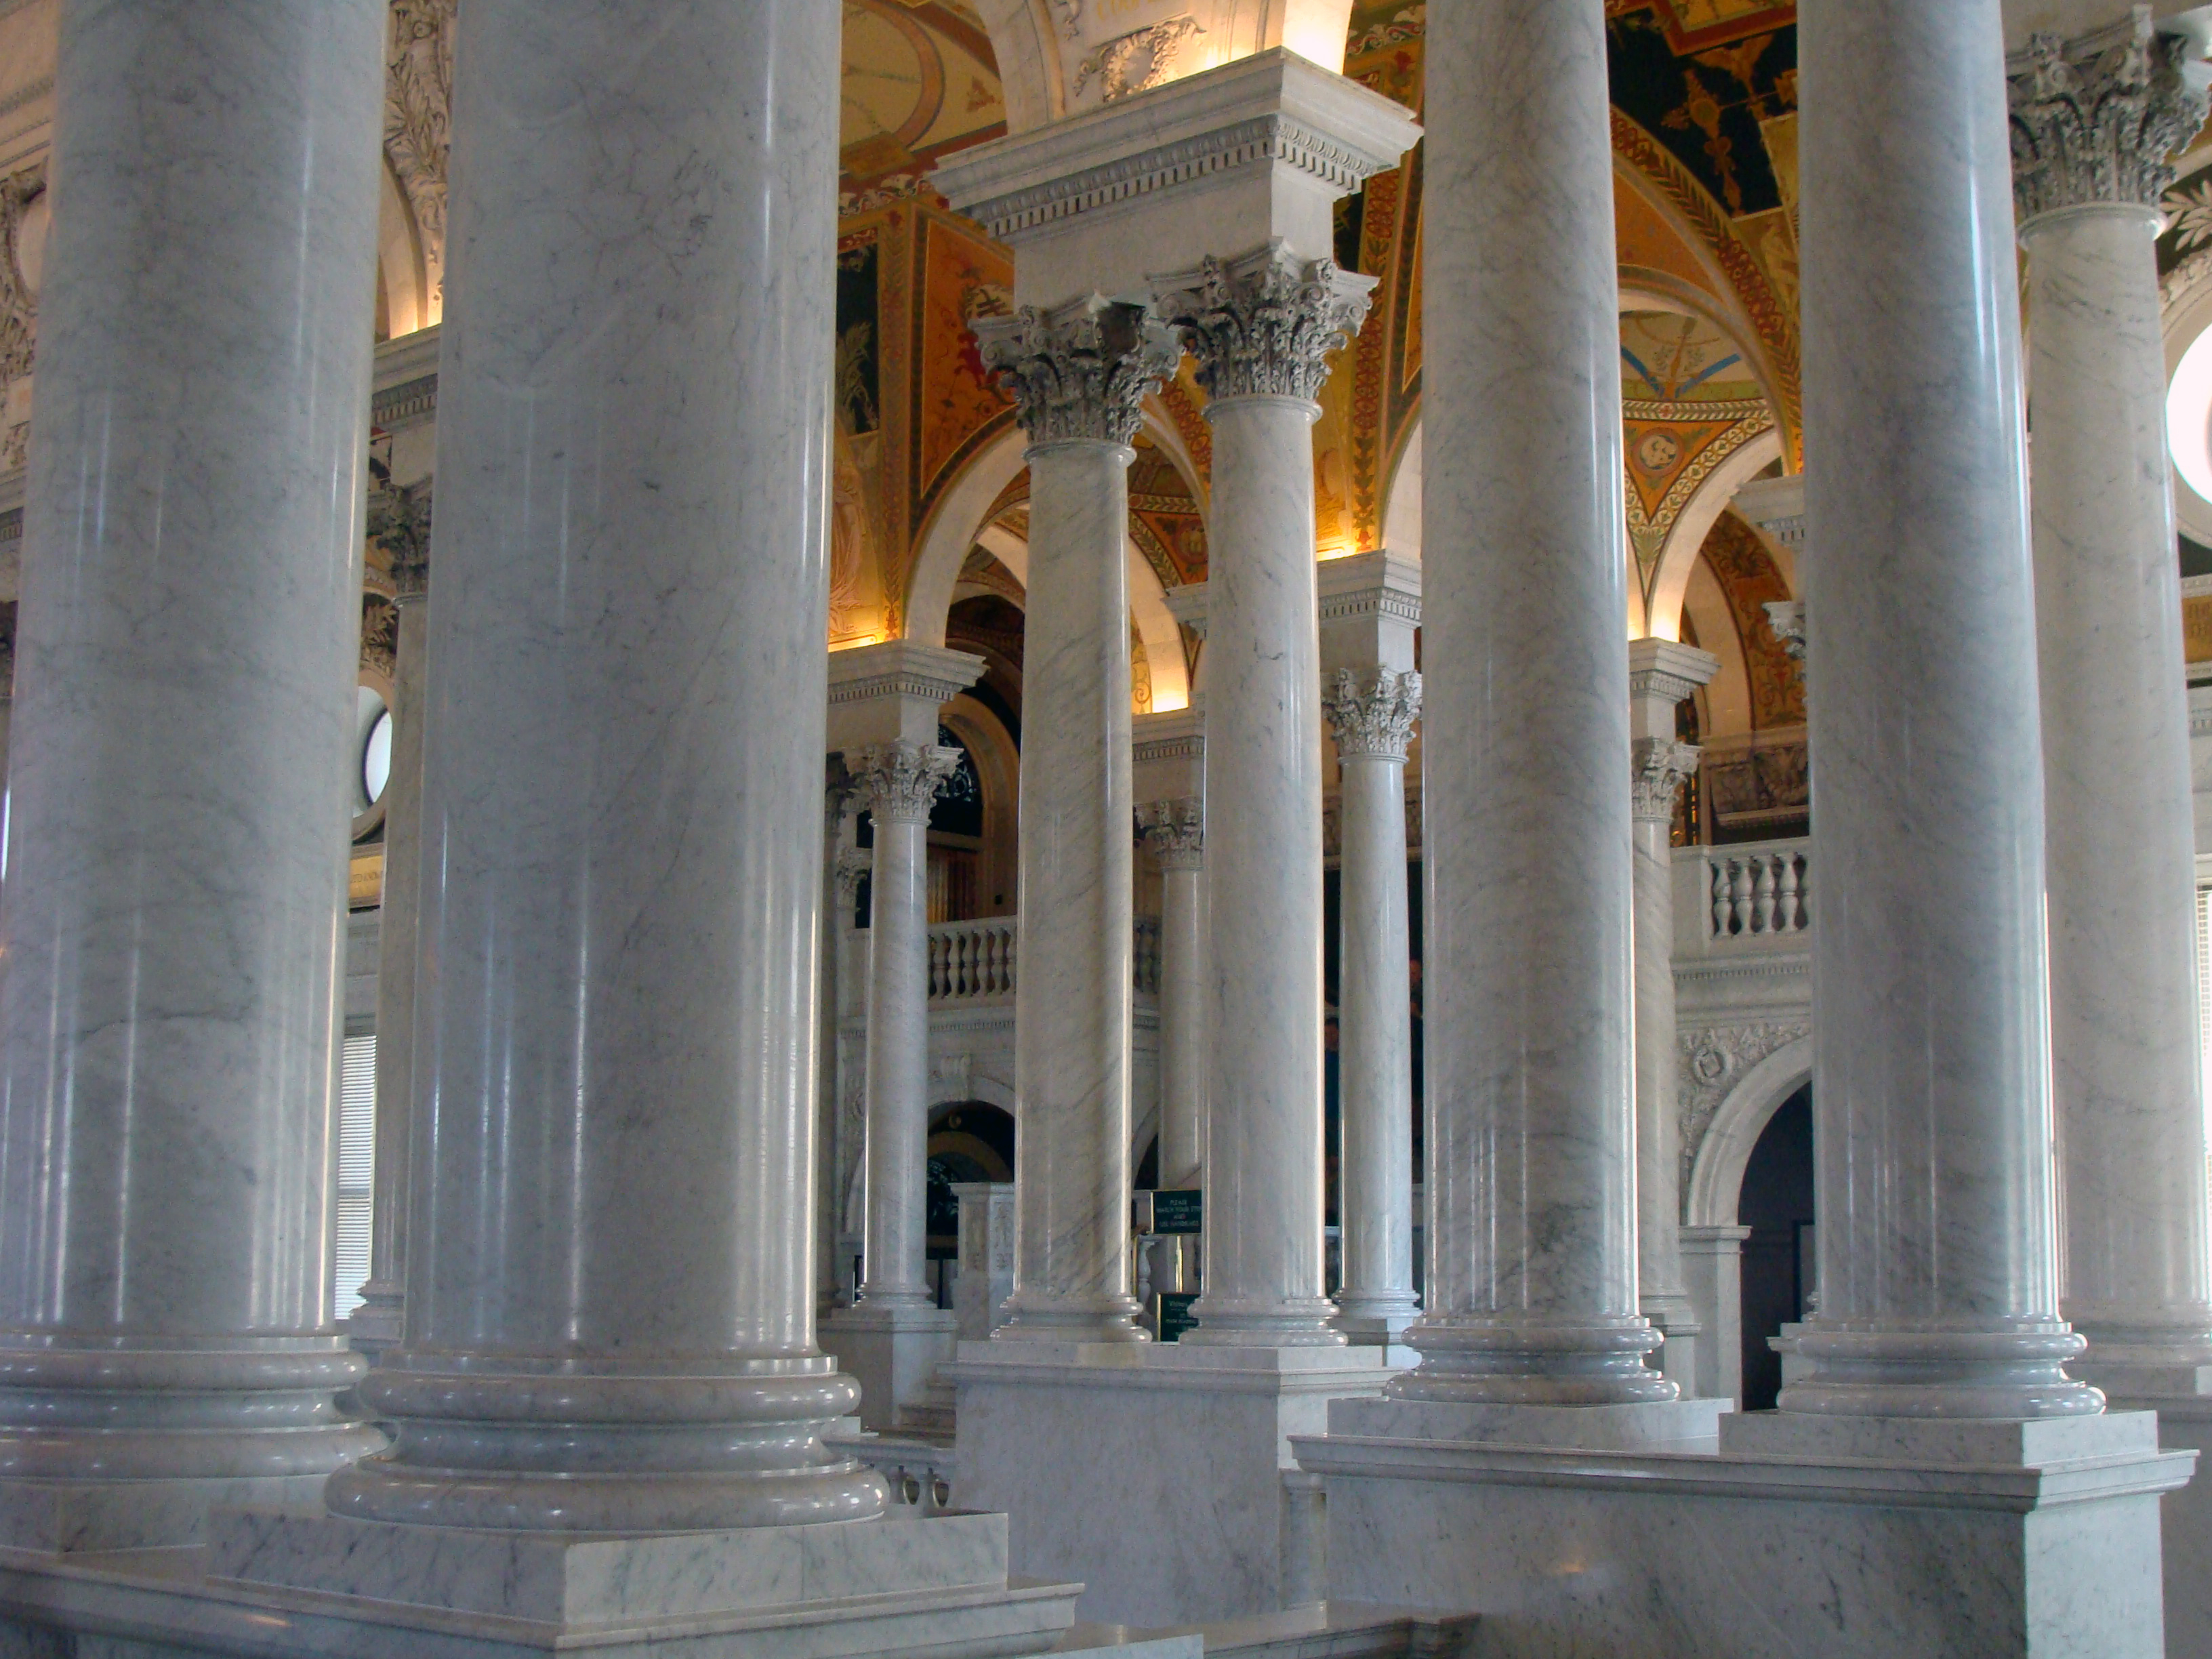 Library_of_Congress_Entrance_Hall_Columns